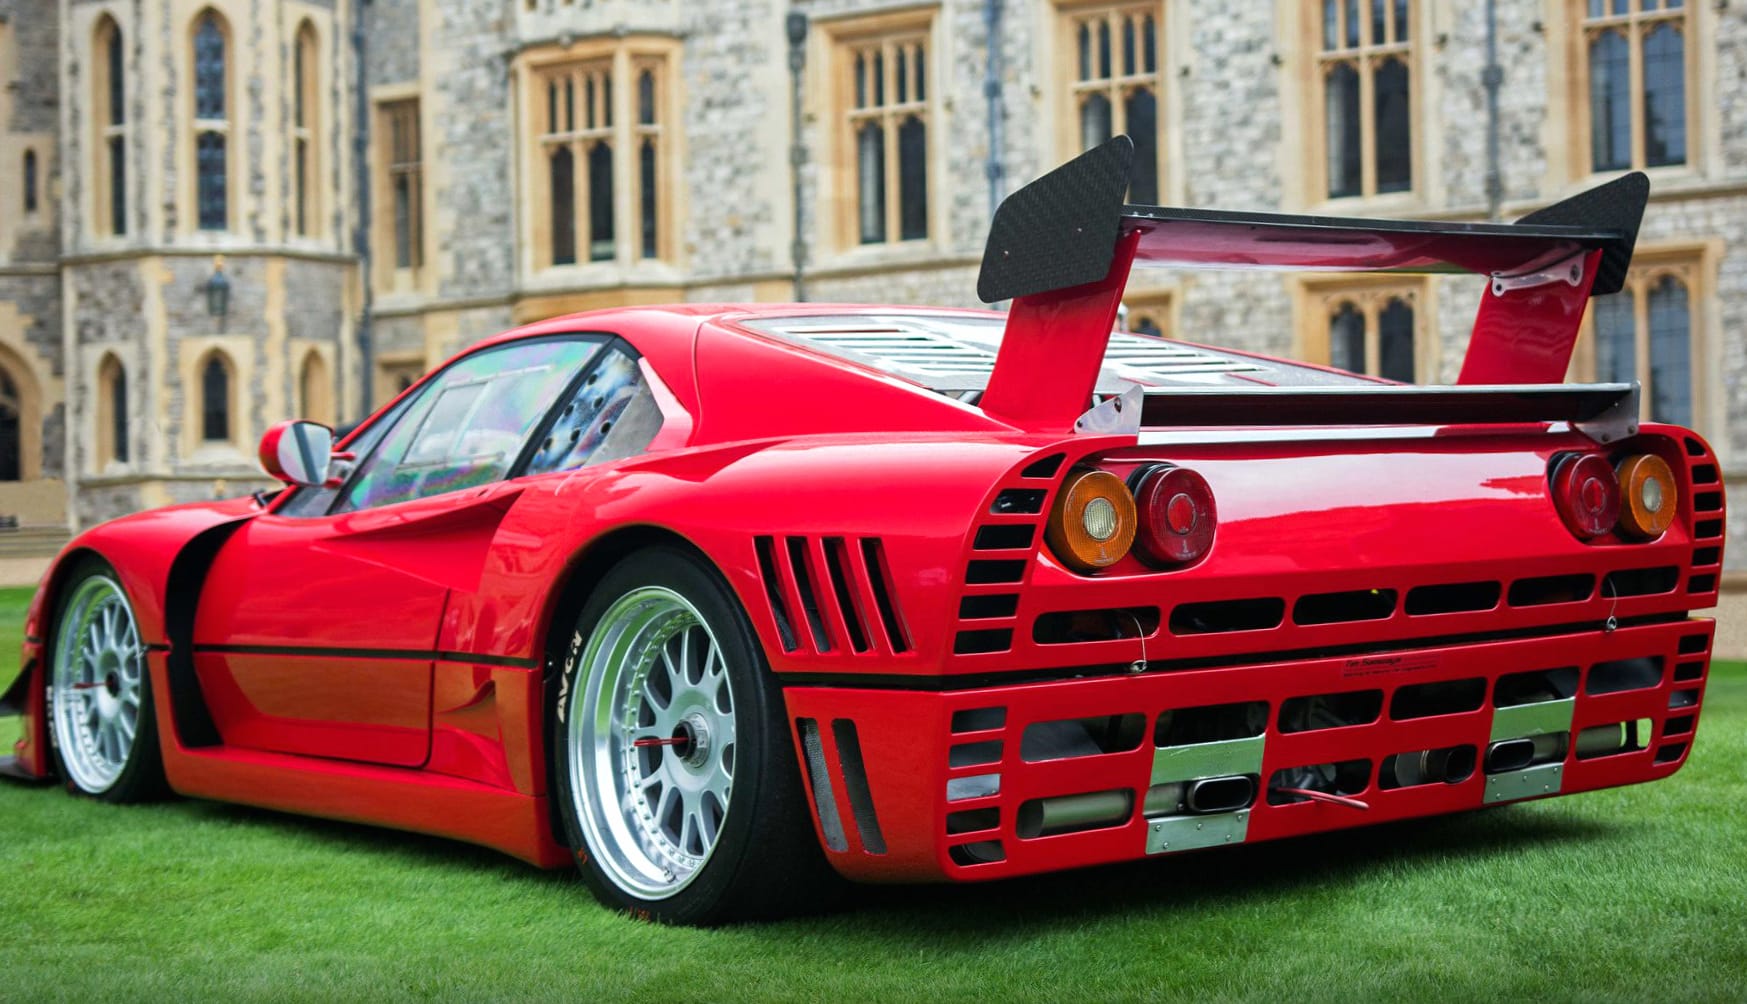 Ferrari GTO Evoluzione at 1334 x 750 iPhone 7 size wallpapers HD quality